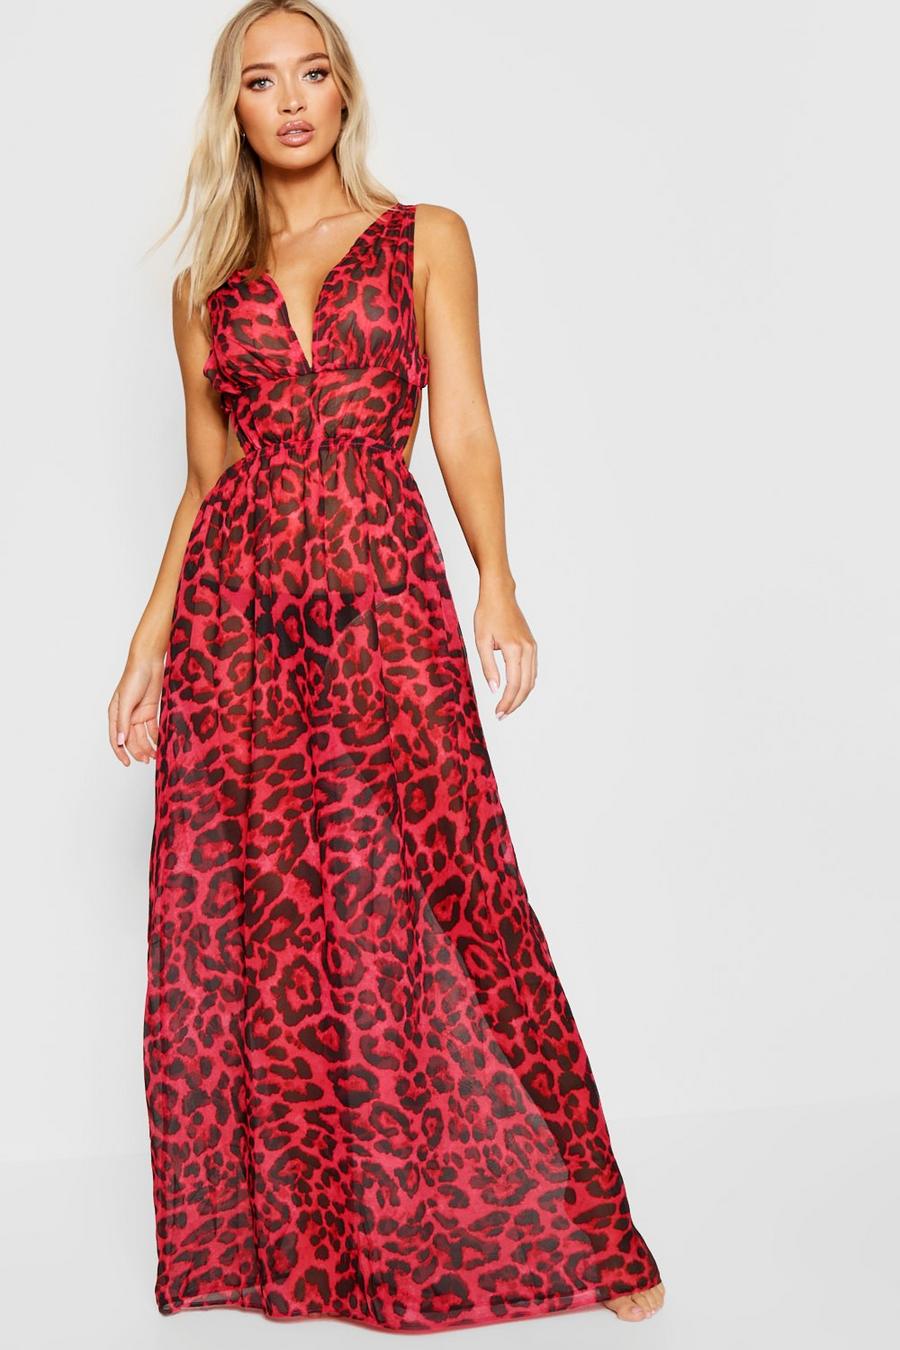 Leopard Print Beach Maxi Dress image number 1